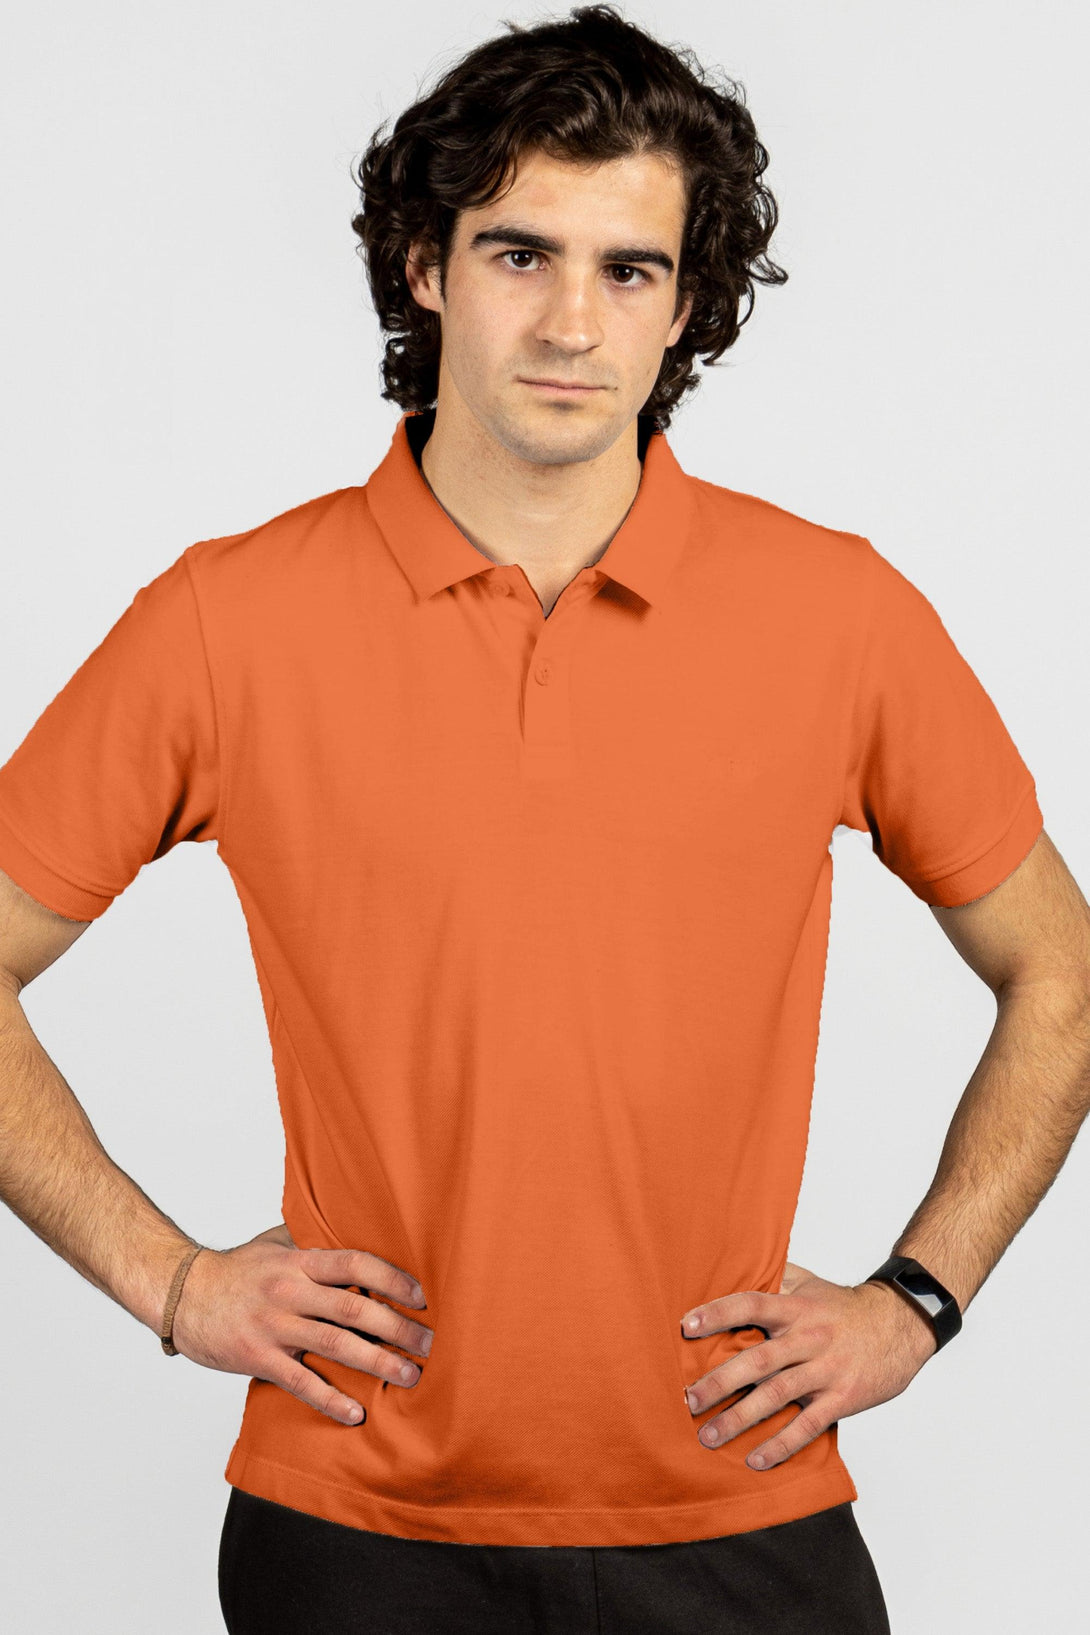 Polo T-Shirt YELLOW - ORANGE - FTS